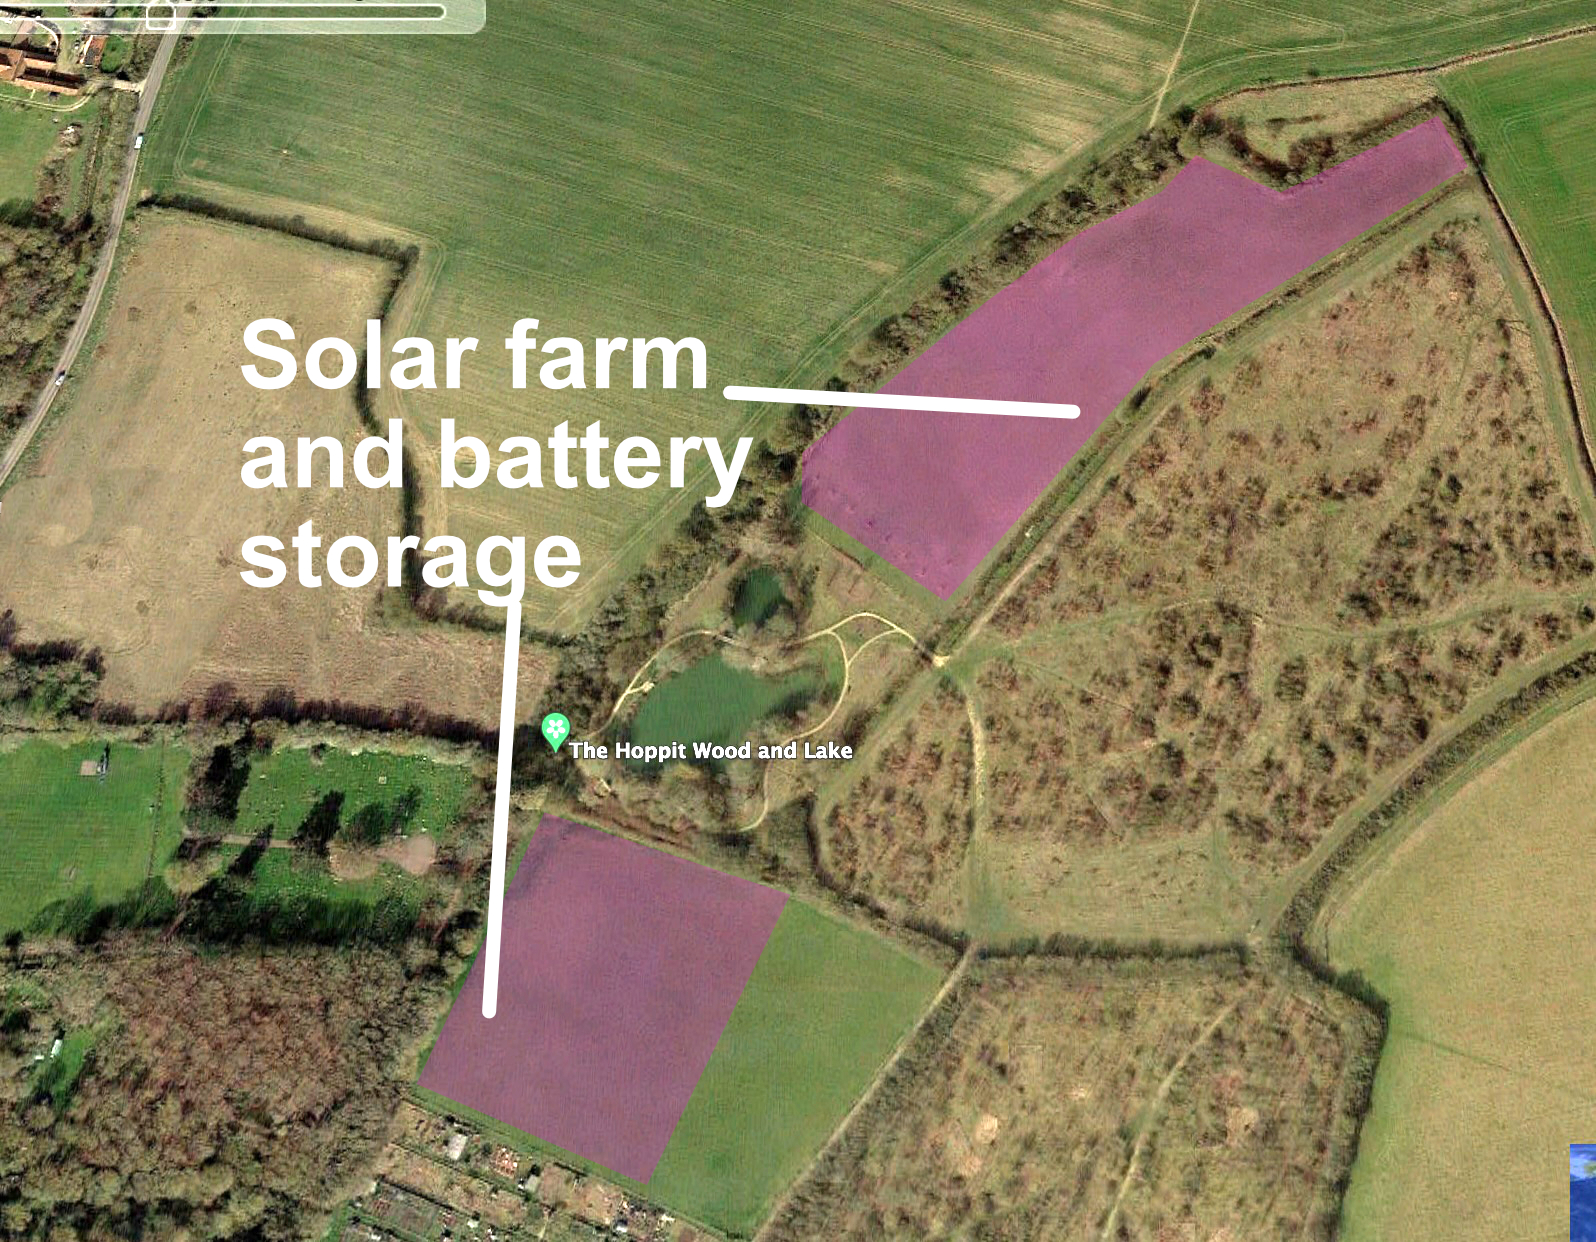 Proposed solar farm location